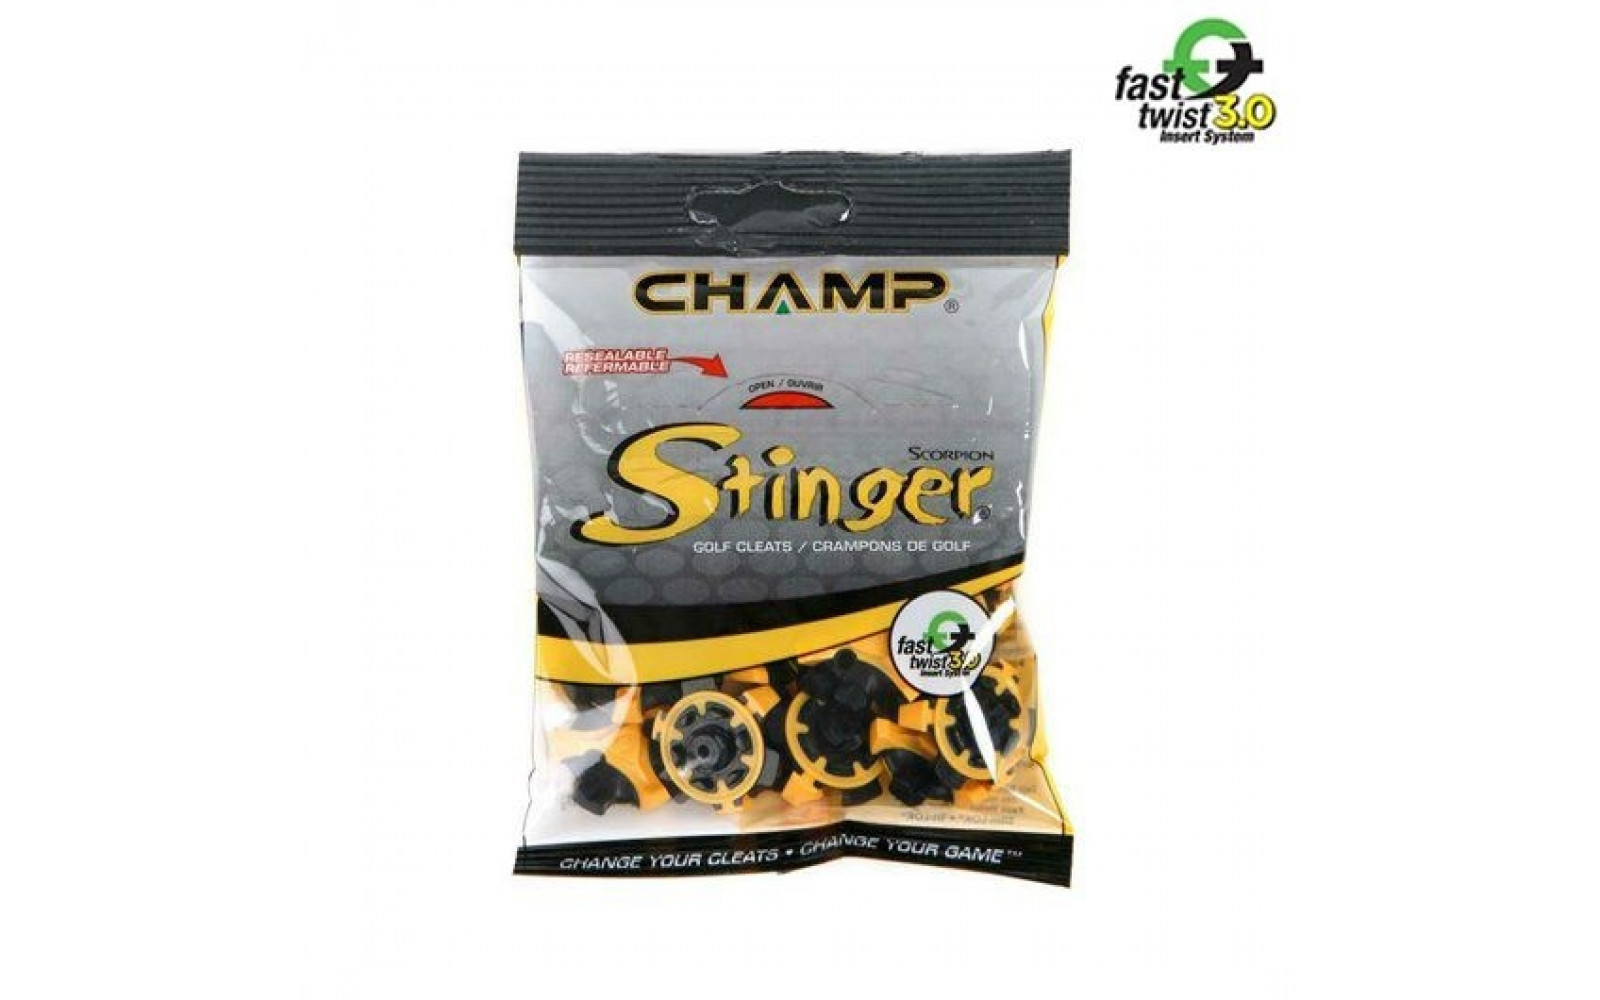 Champ Spikes Stinger / Fast - Twist 3.0